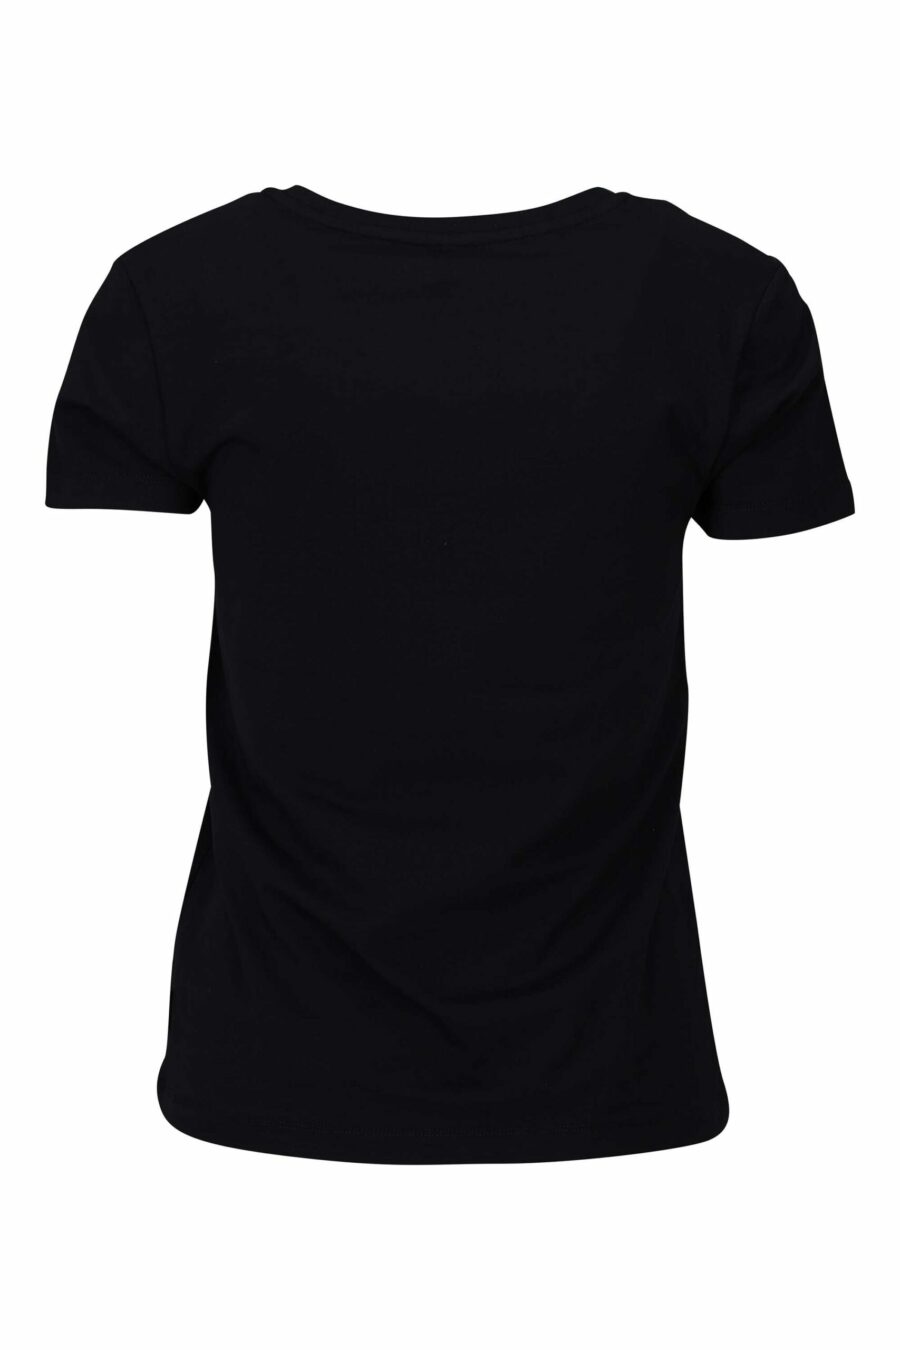 Camiseta negra con logo parche oso "underbear" - 667113034348 1 scaled